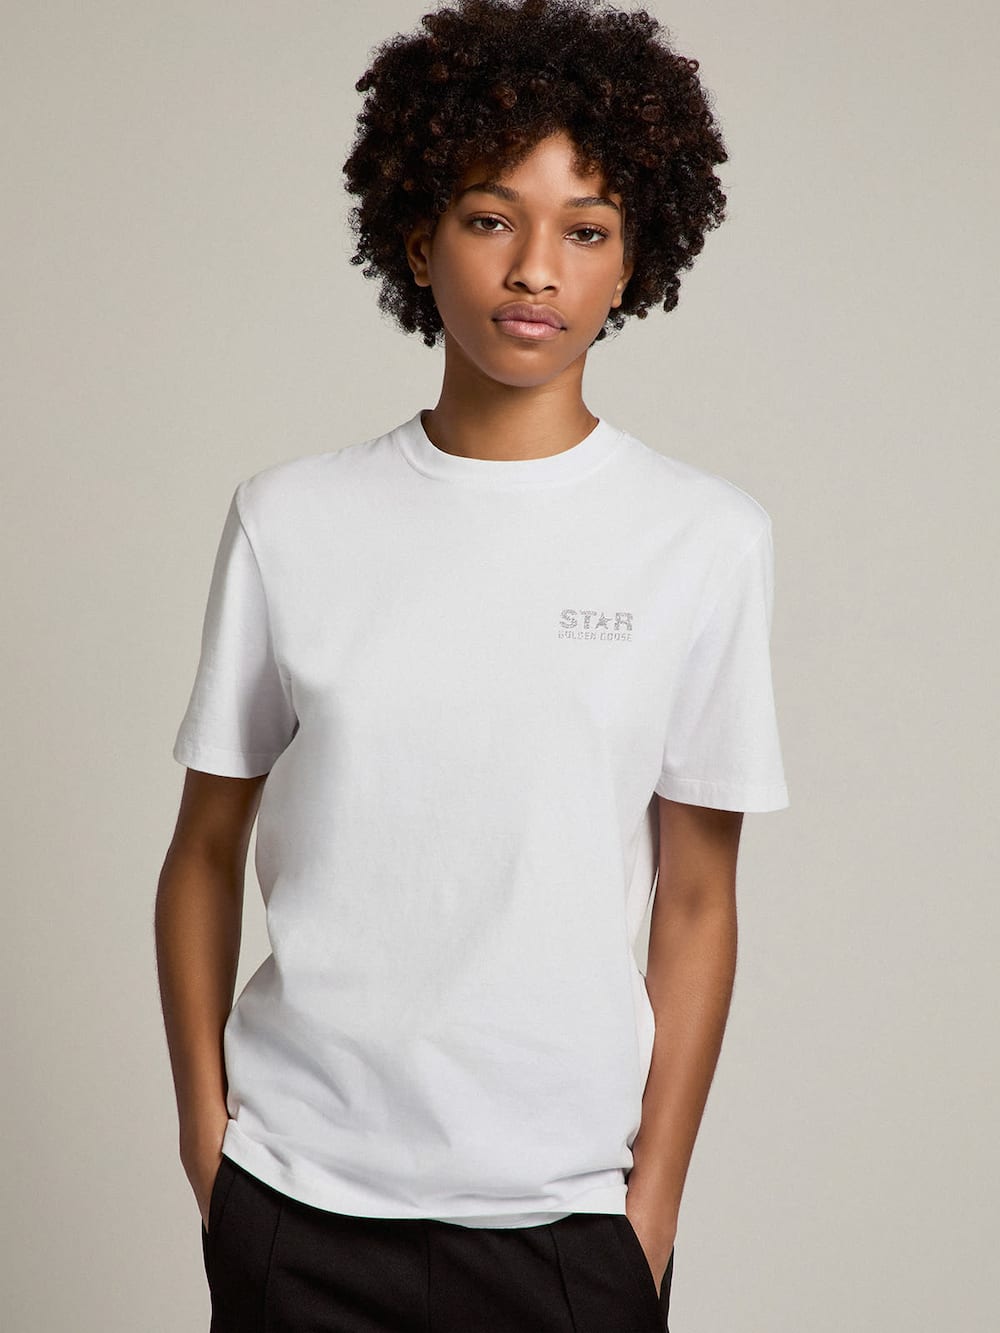 Golden Goose - Camiseta feminina branca com logo e estrela de glitter prateado in 